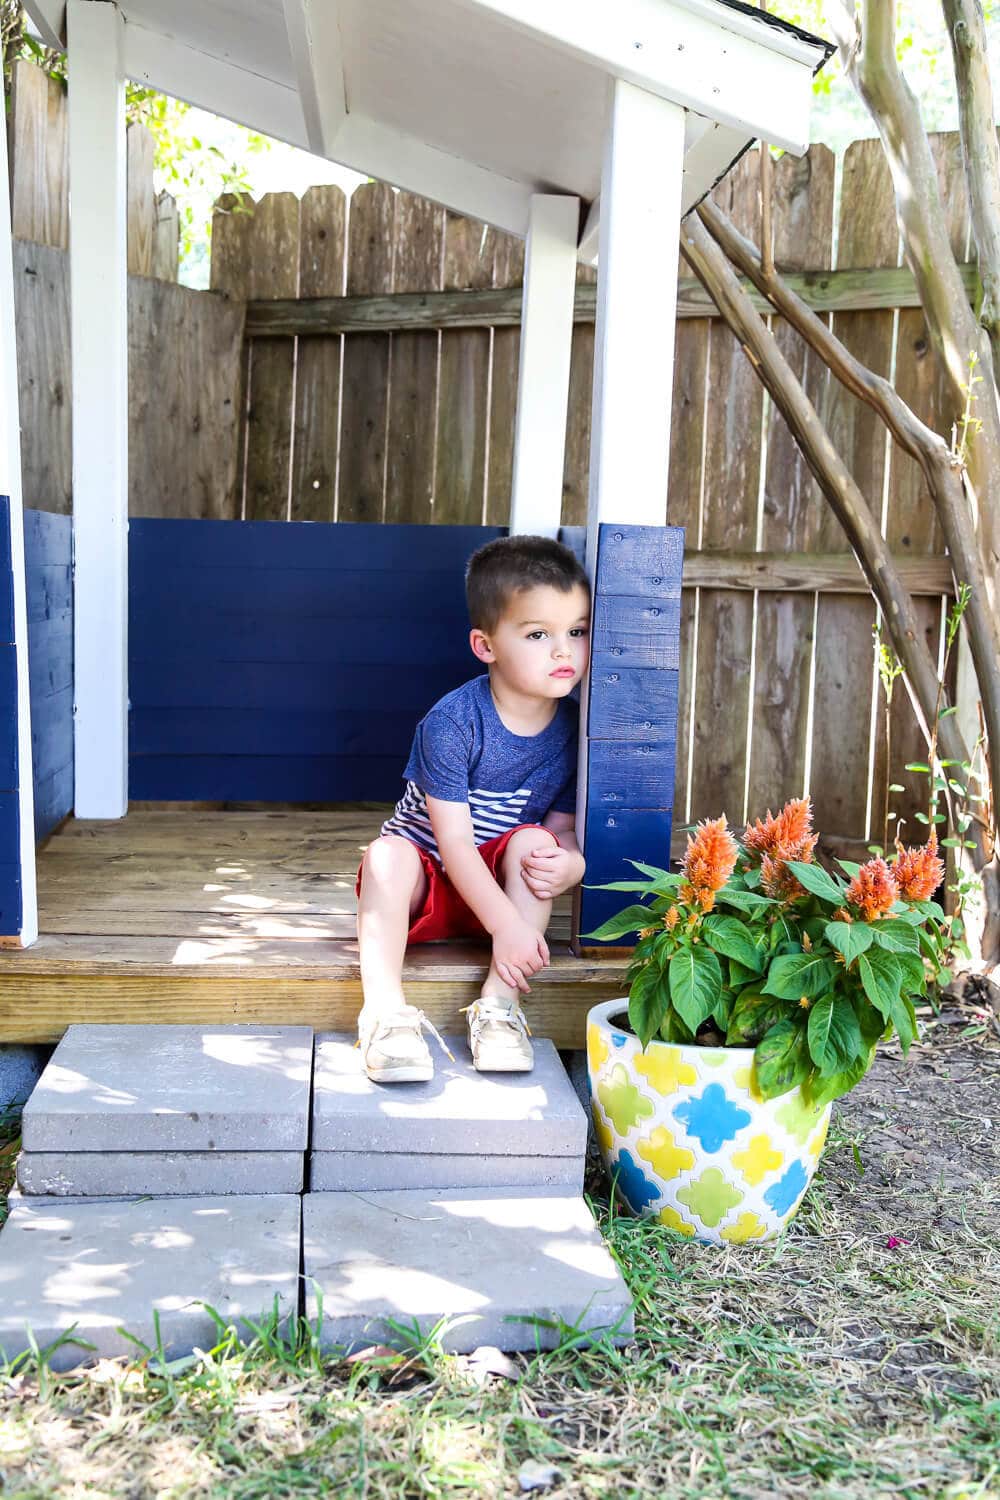 DIY Playhouse: How to Build a Backyard Playhouse for Your Toddler